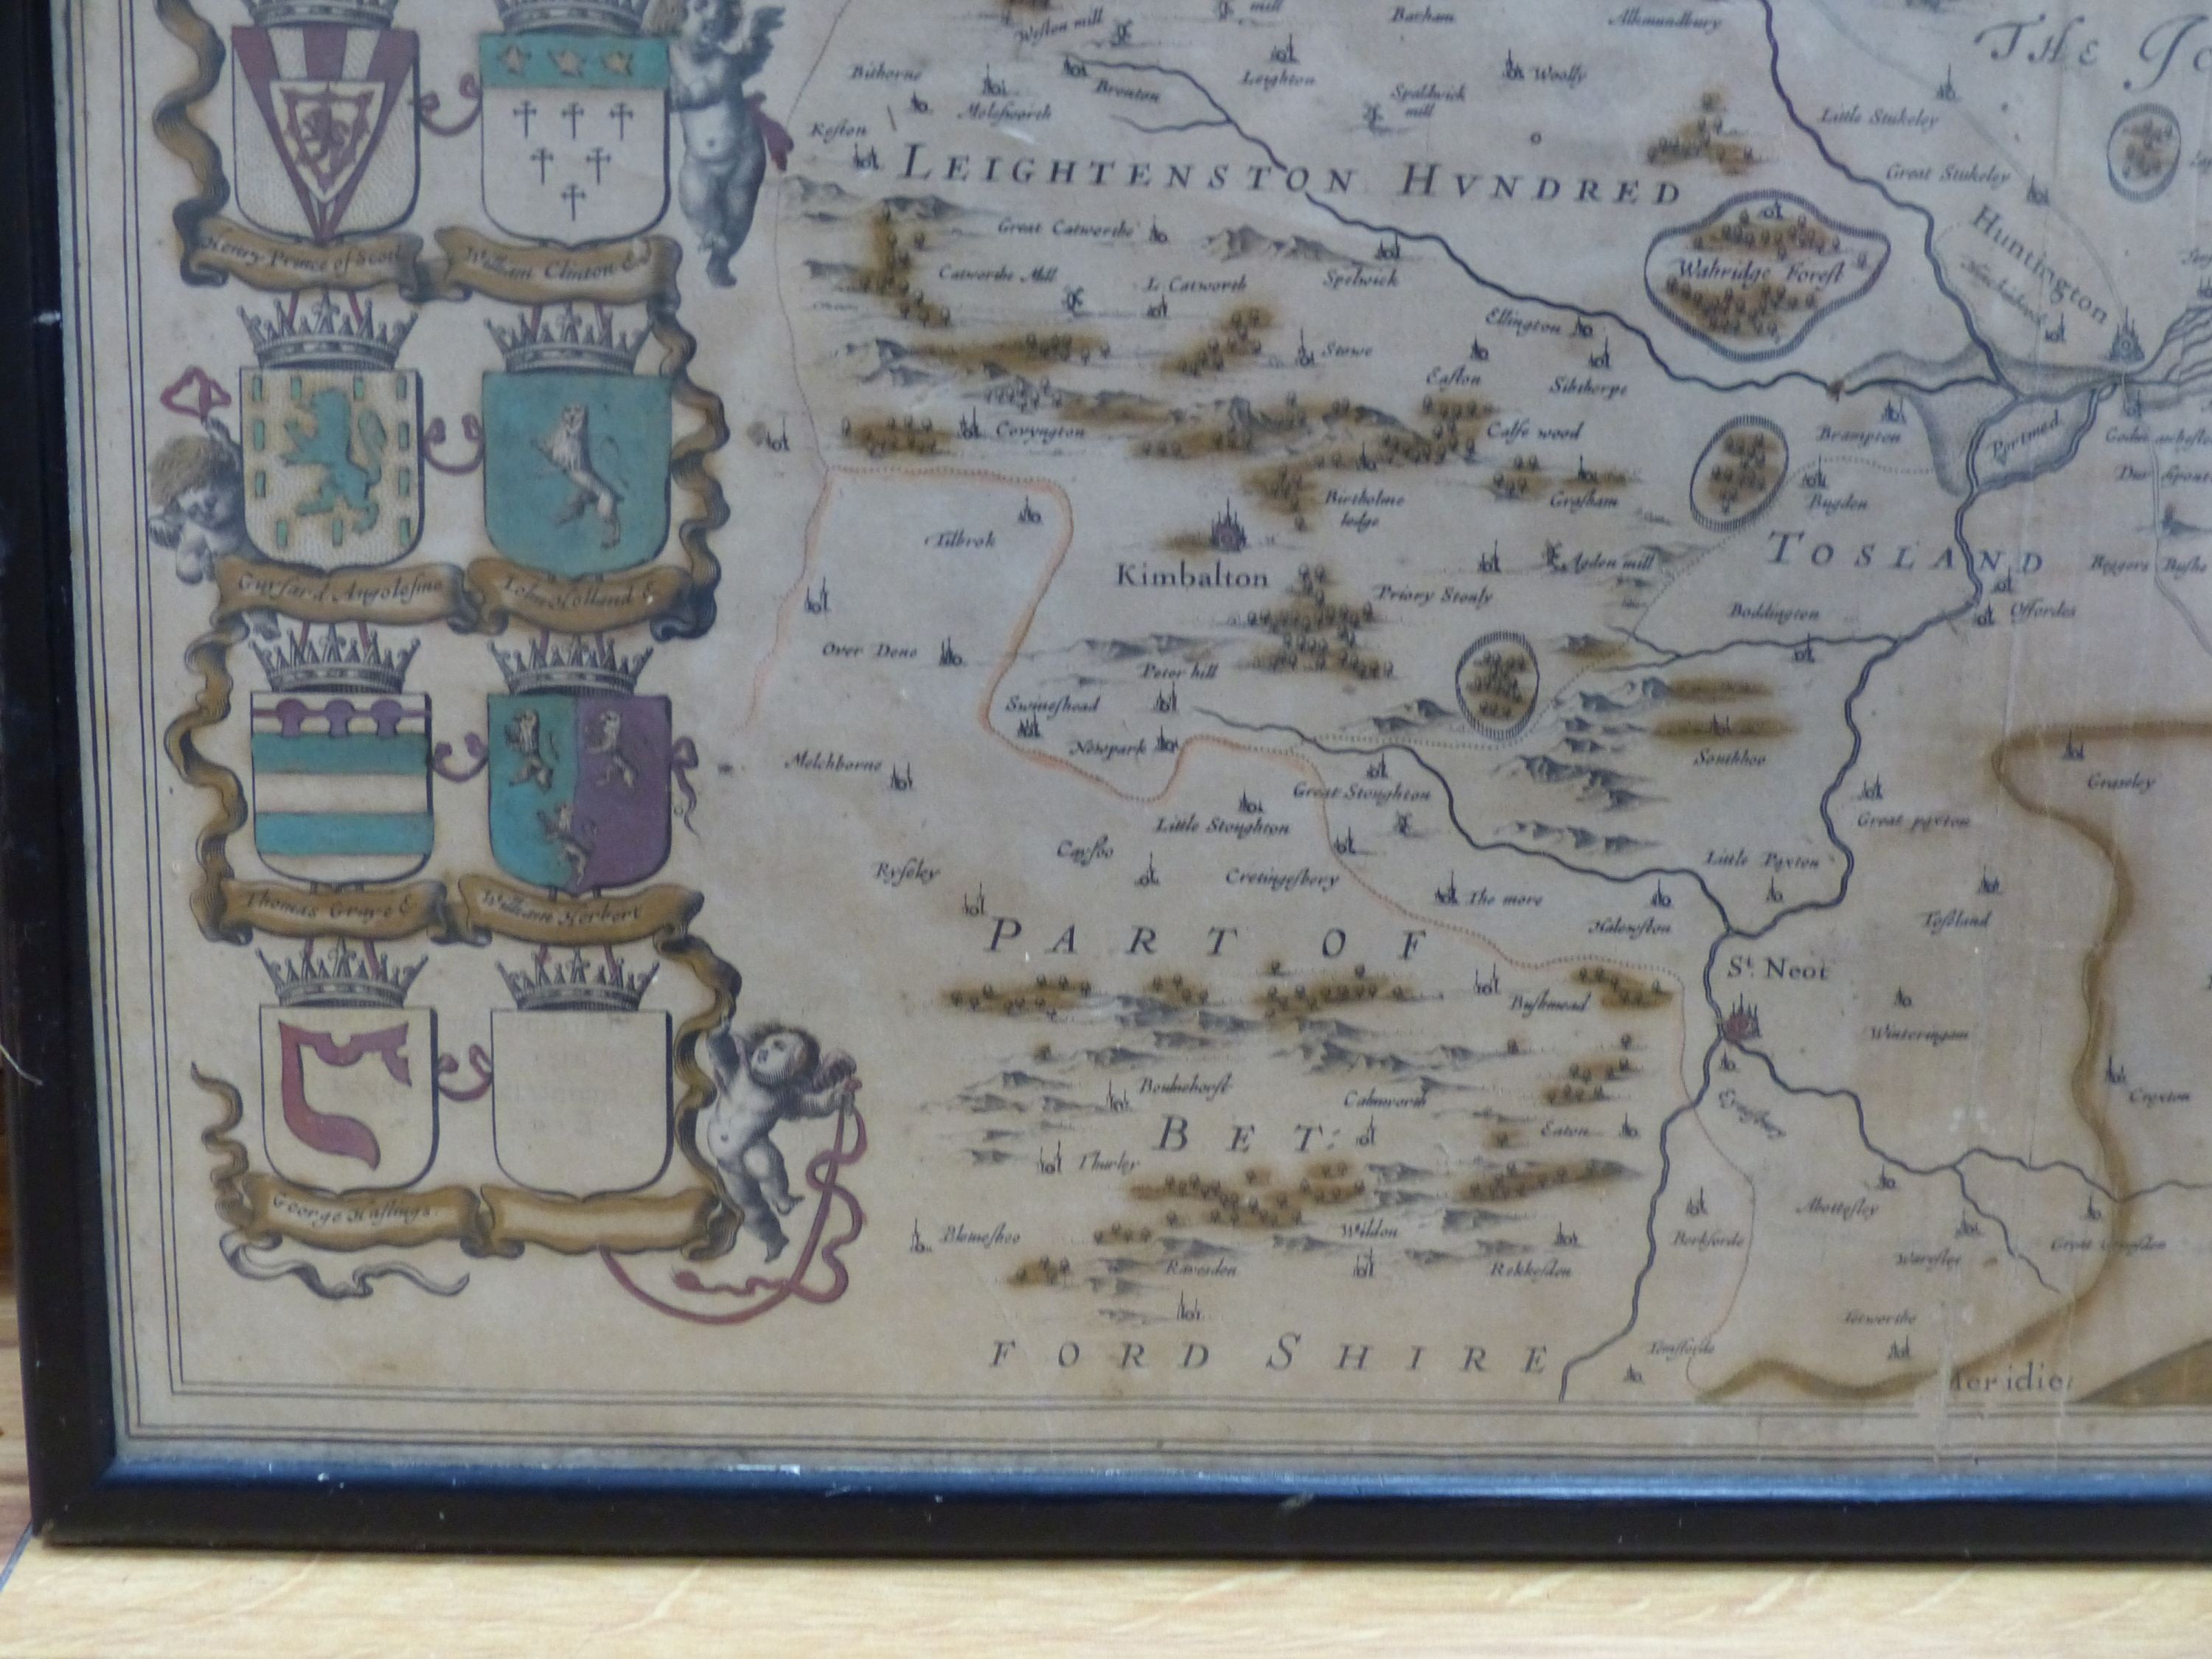 Blaeu, coloured engraving, Map of Huntingdonensis, c1700, 40 x 50cm